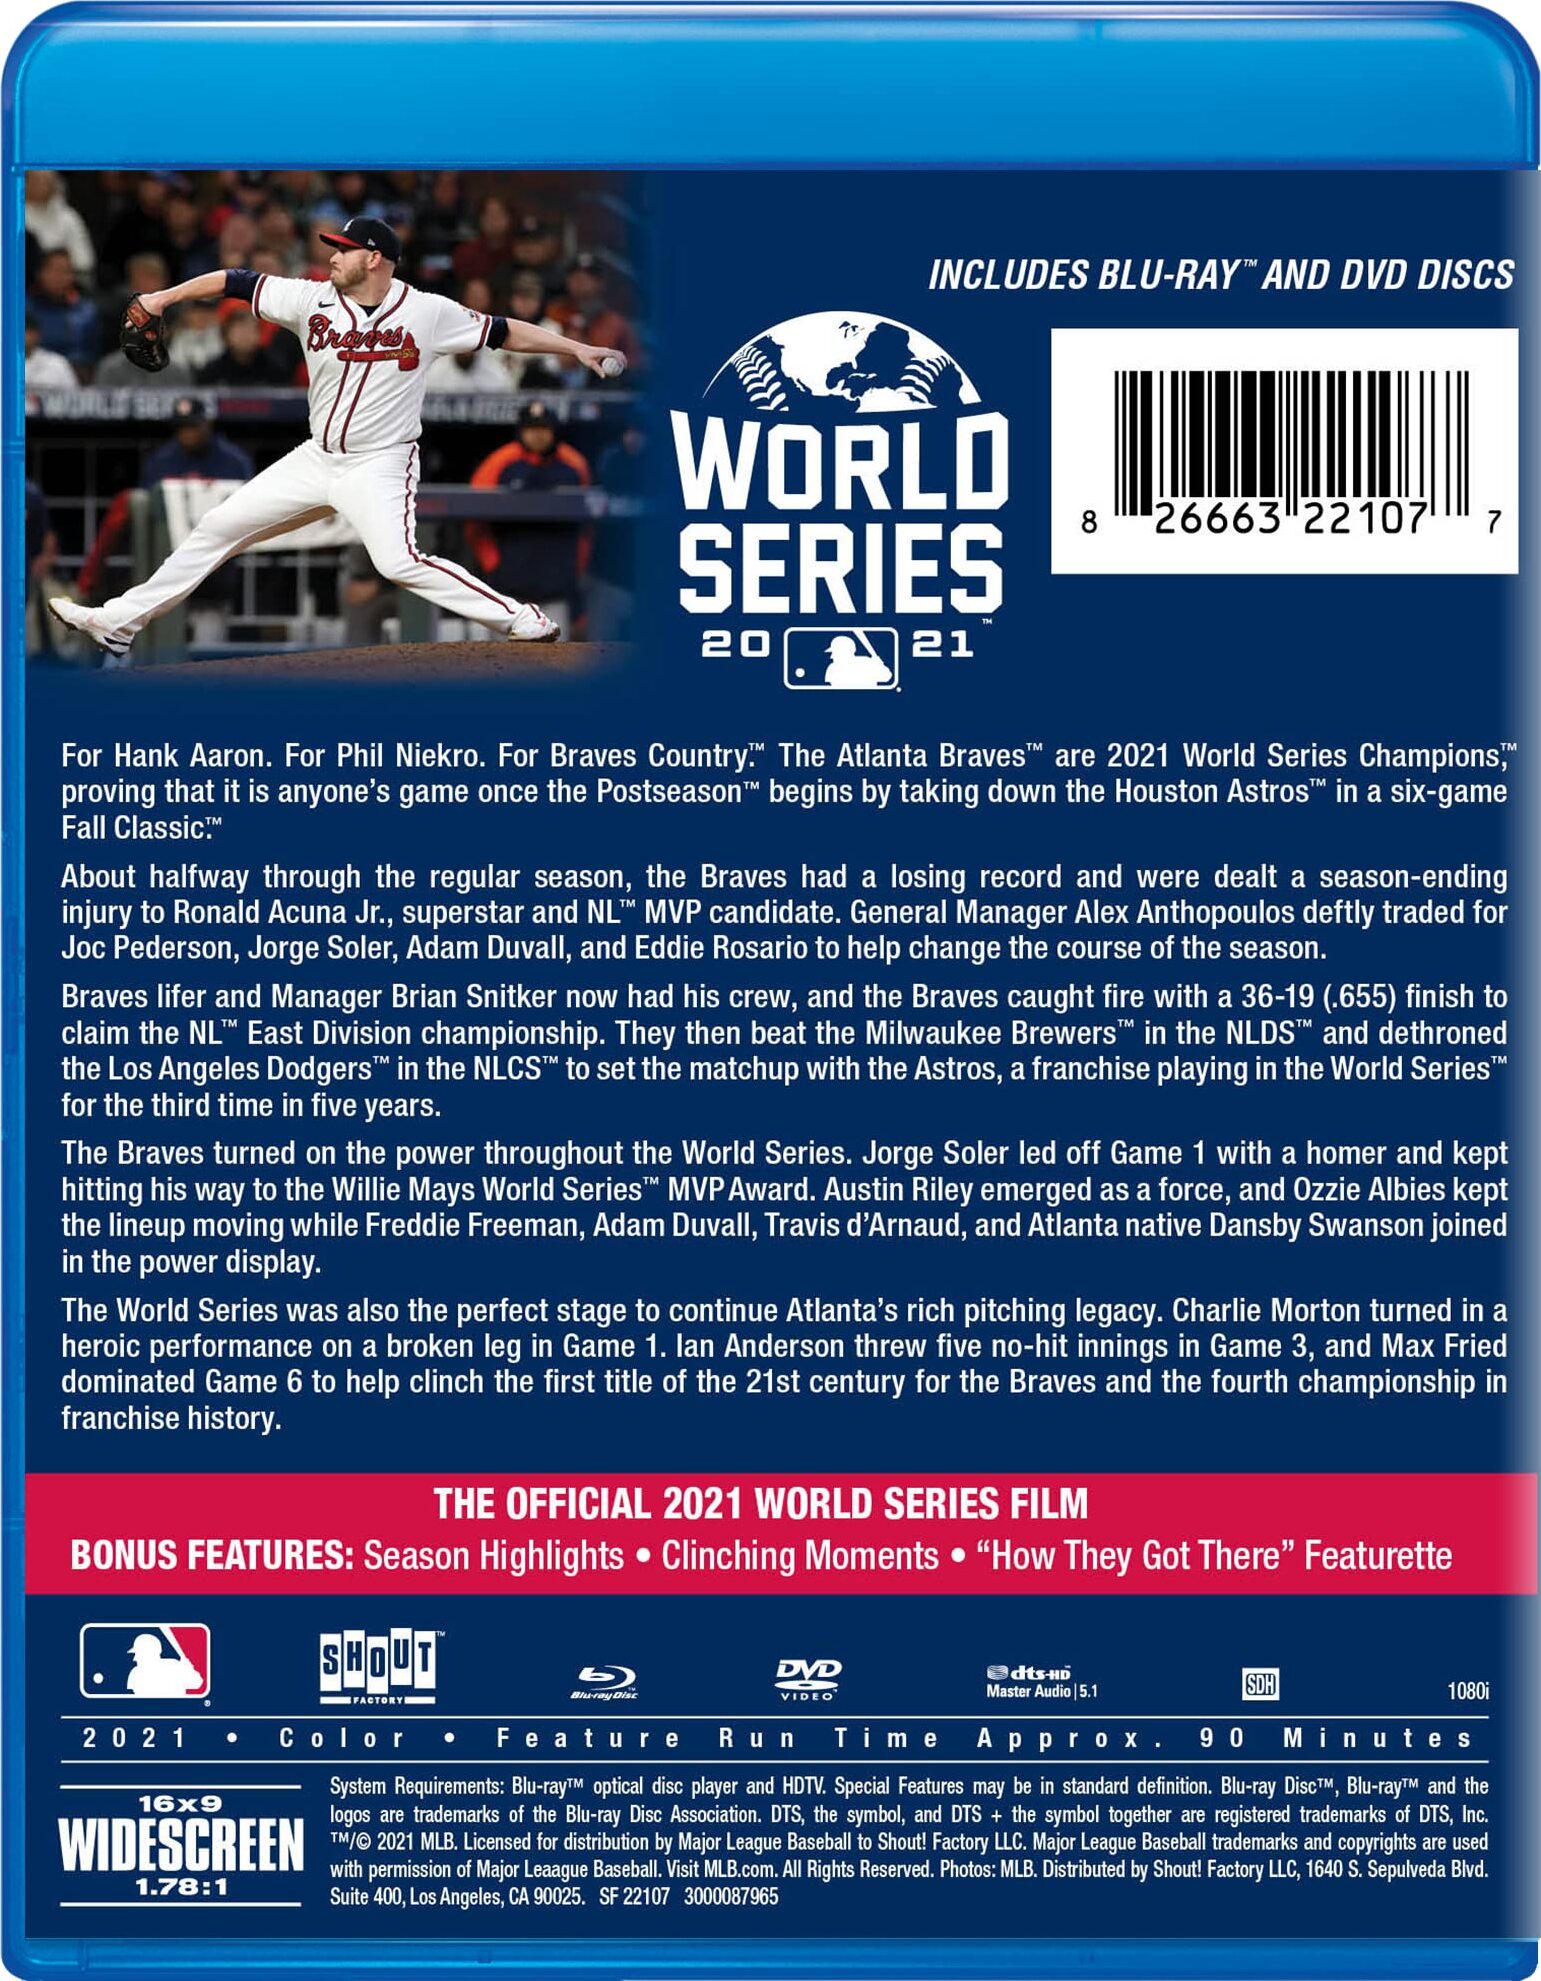 2020 World Series Champions: Los Angeles Dodgers [Blu-ray + DVD]